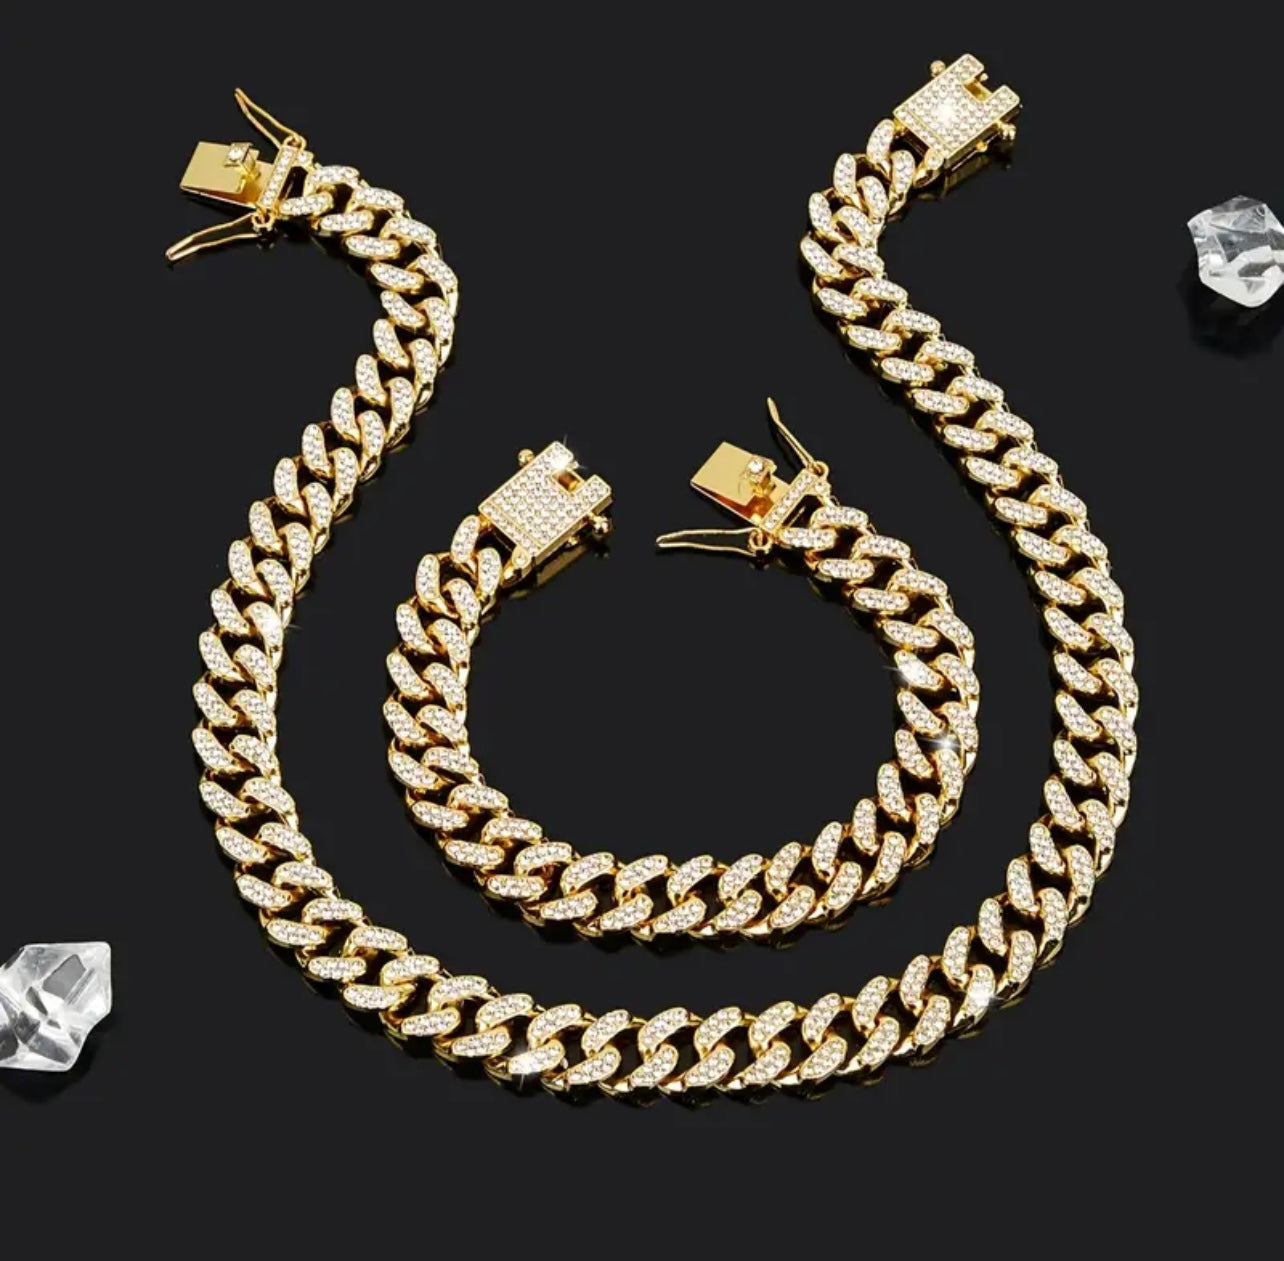 13mm Golden iced out miami Cuban link neck chain bracelet for men online in pakistan